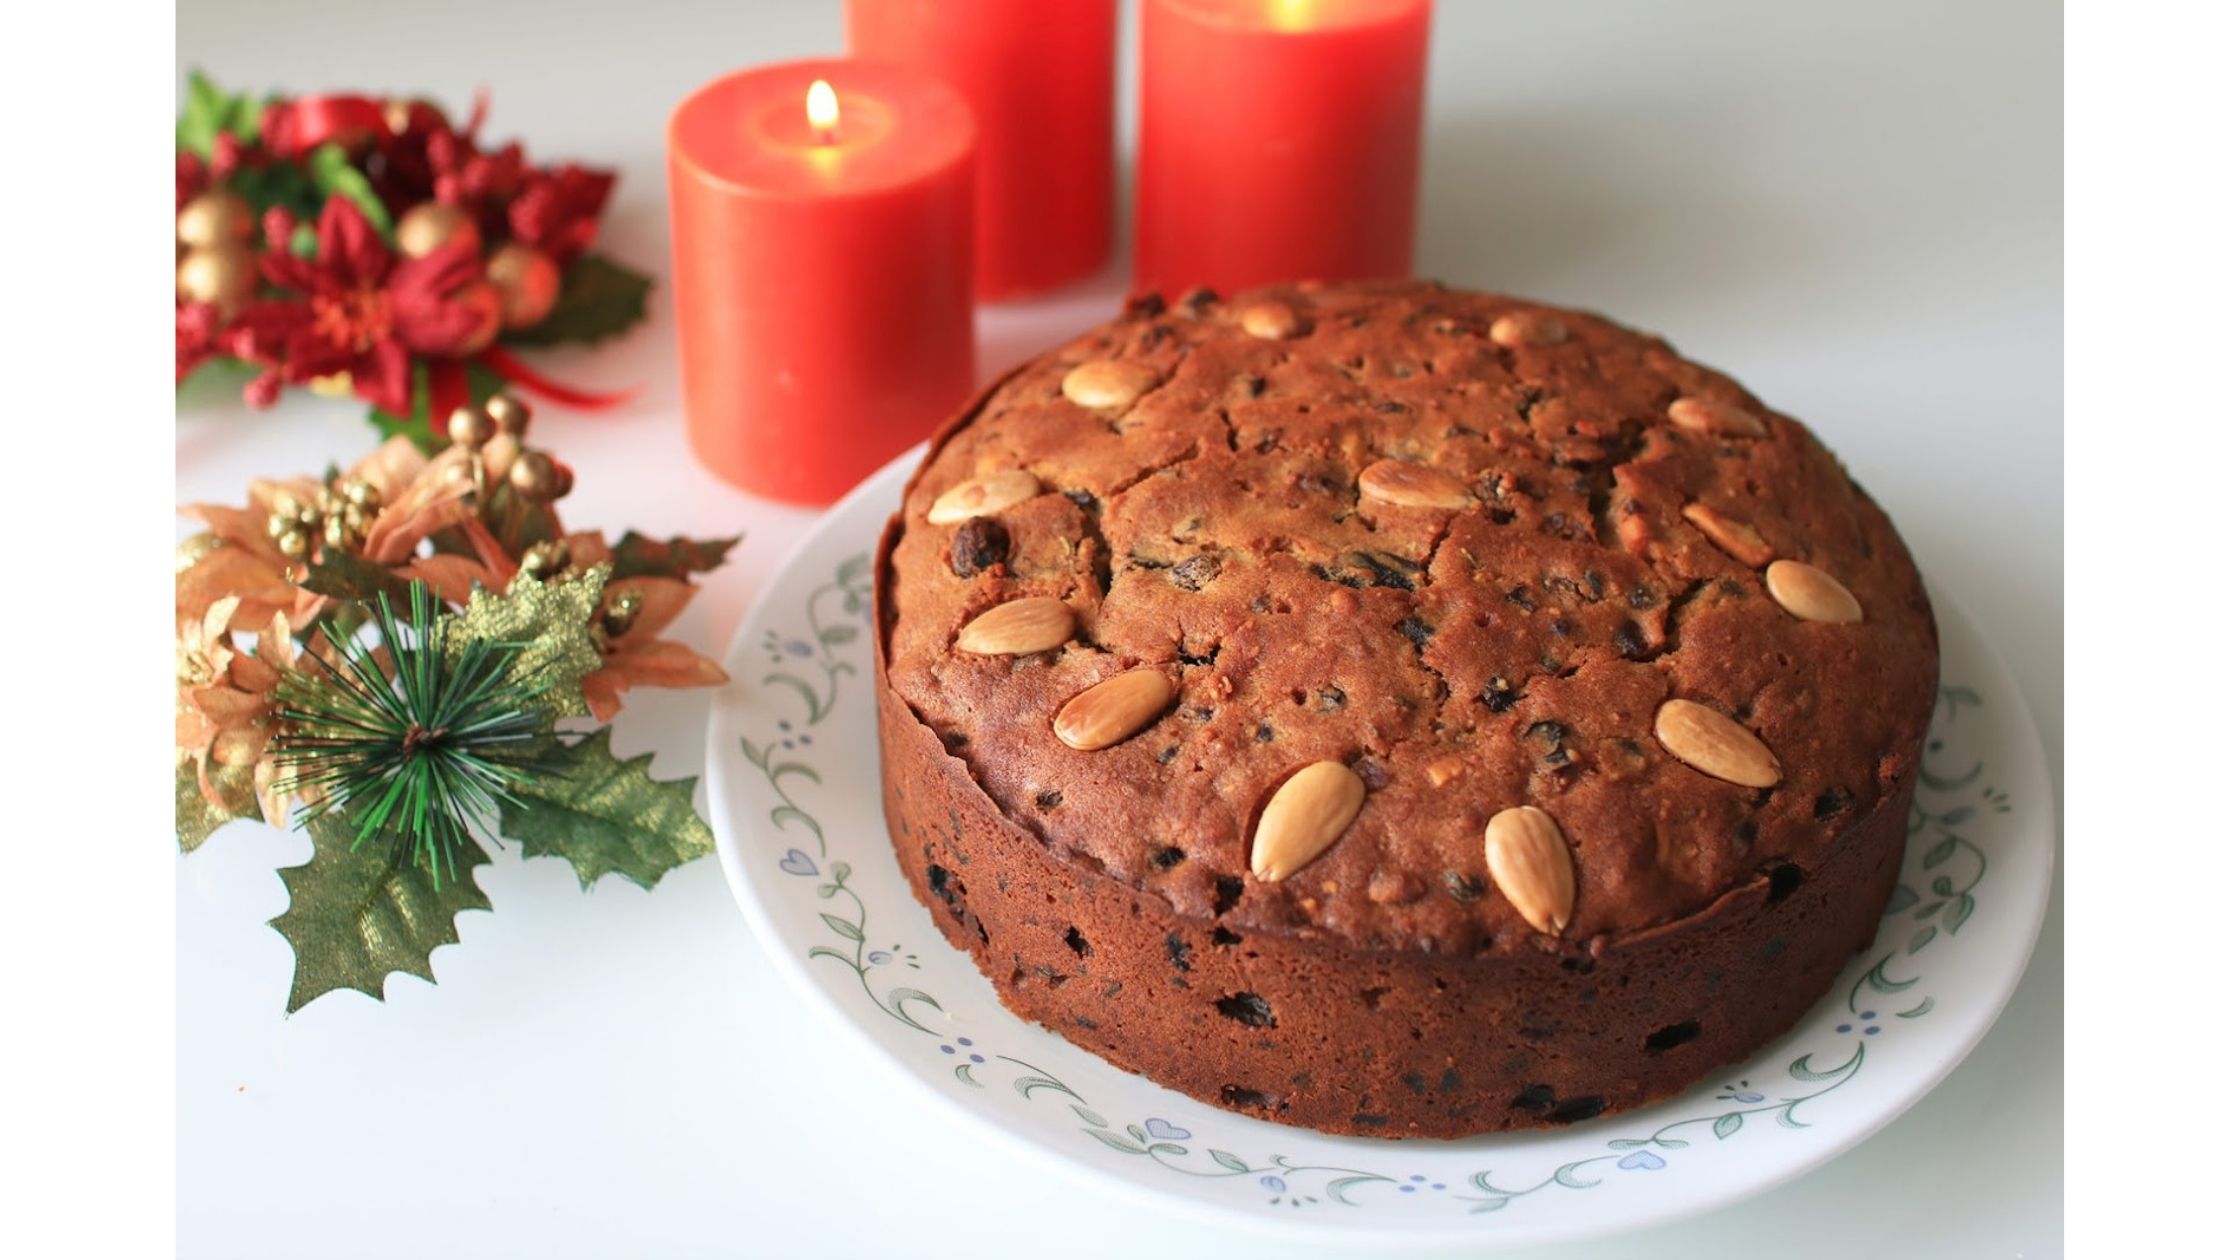 Christmas plum cake ingredients and recipe